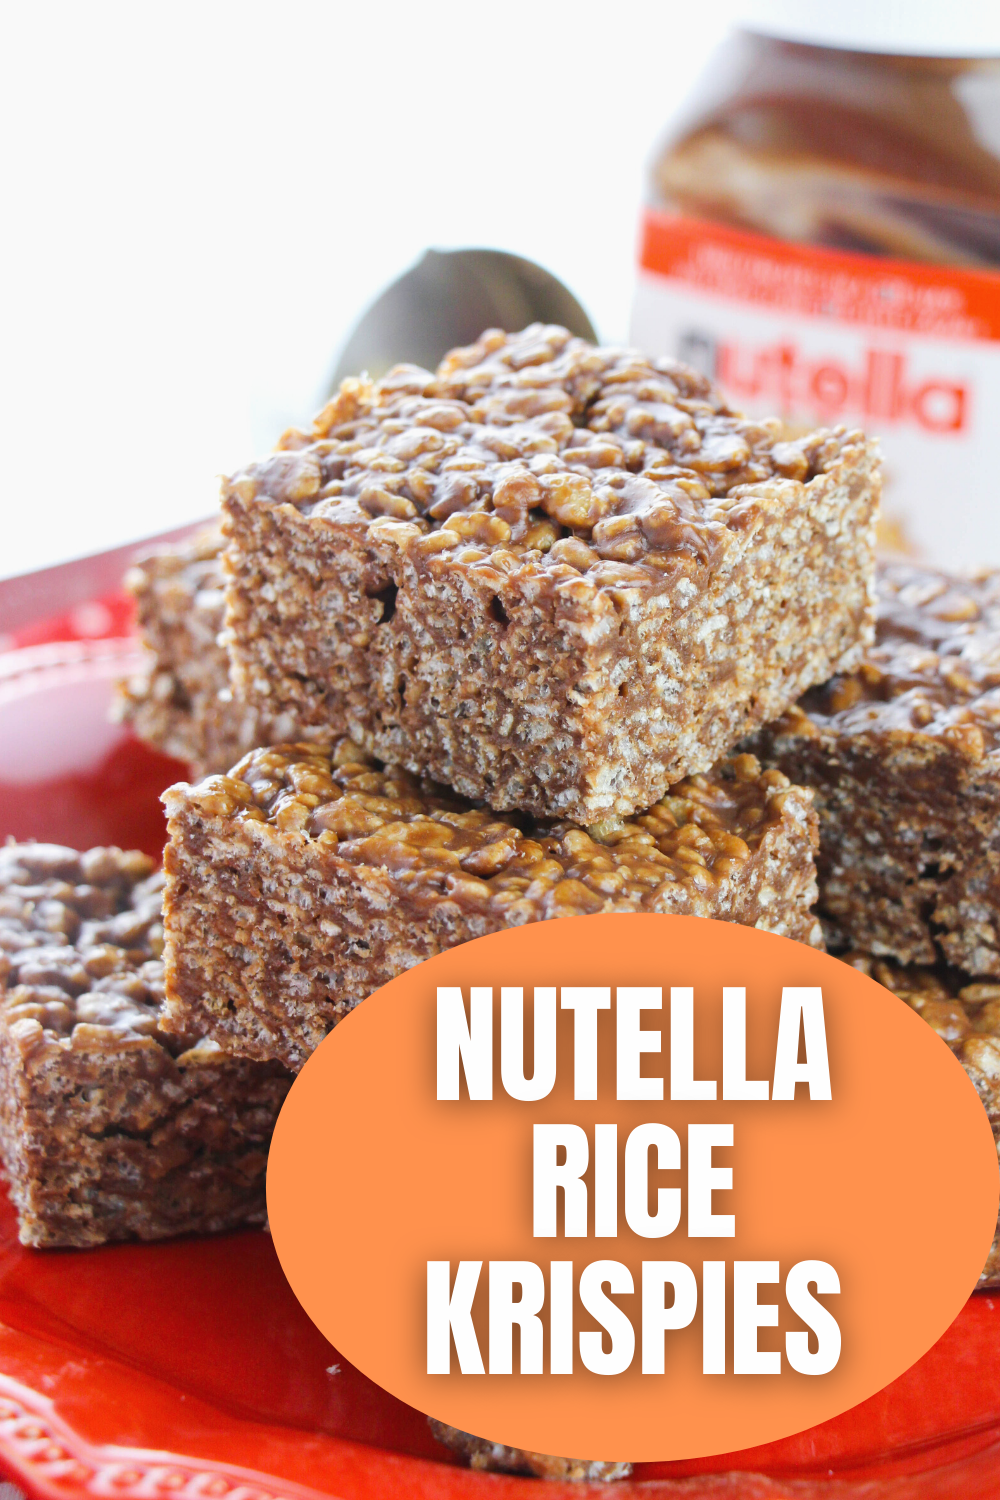 Nutella Rice Krispies : A Delicious and easy Nutella dessert recipe